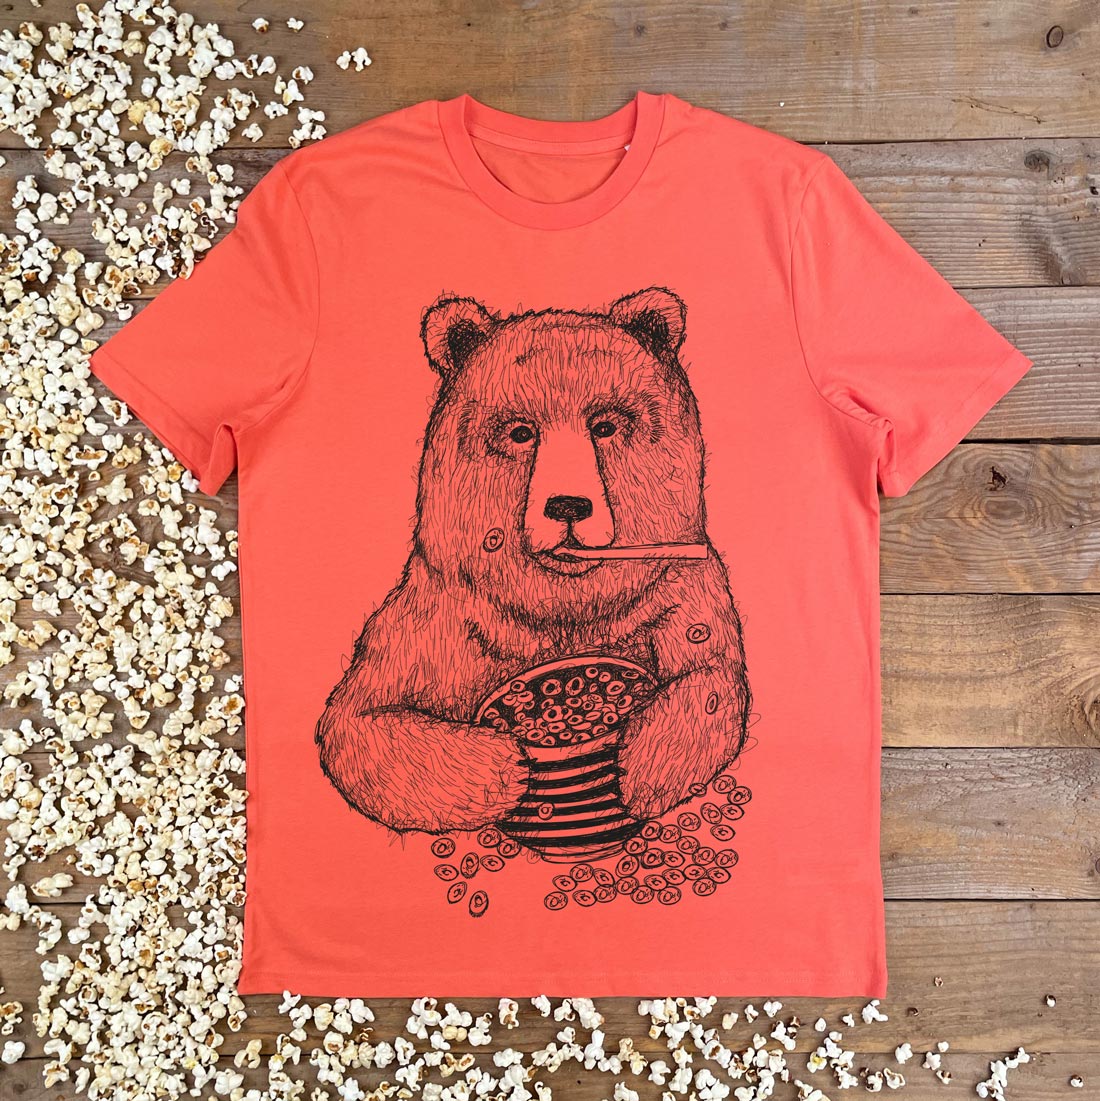 bear eating cereal orangey tshirt